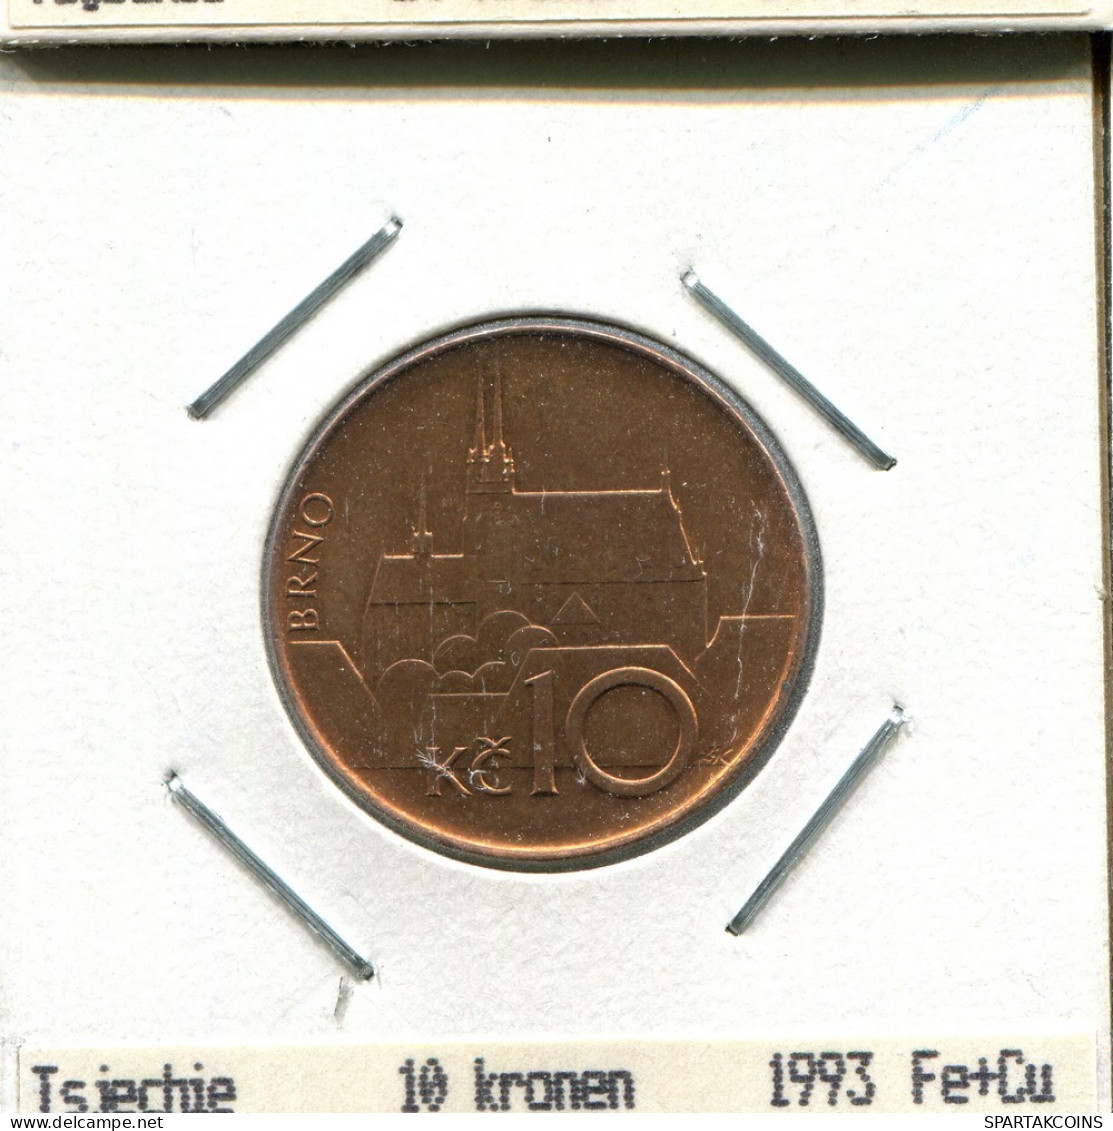 10 KORUN 1993 CHECOSLOVAQUIA CZECHOESLOVAQUIA SLOVAKIA Moneda #AS543.E.A - Cecoslovacchia